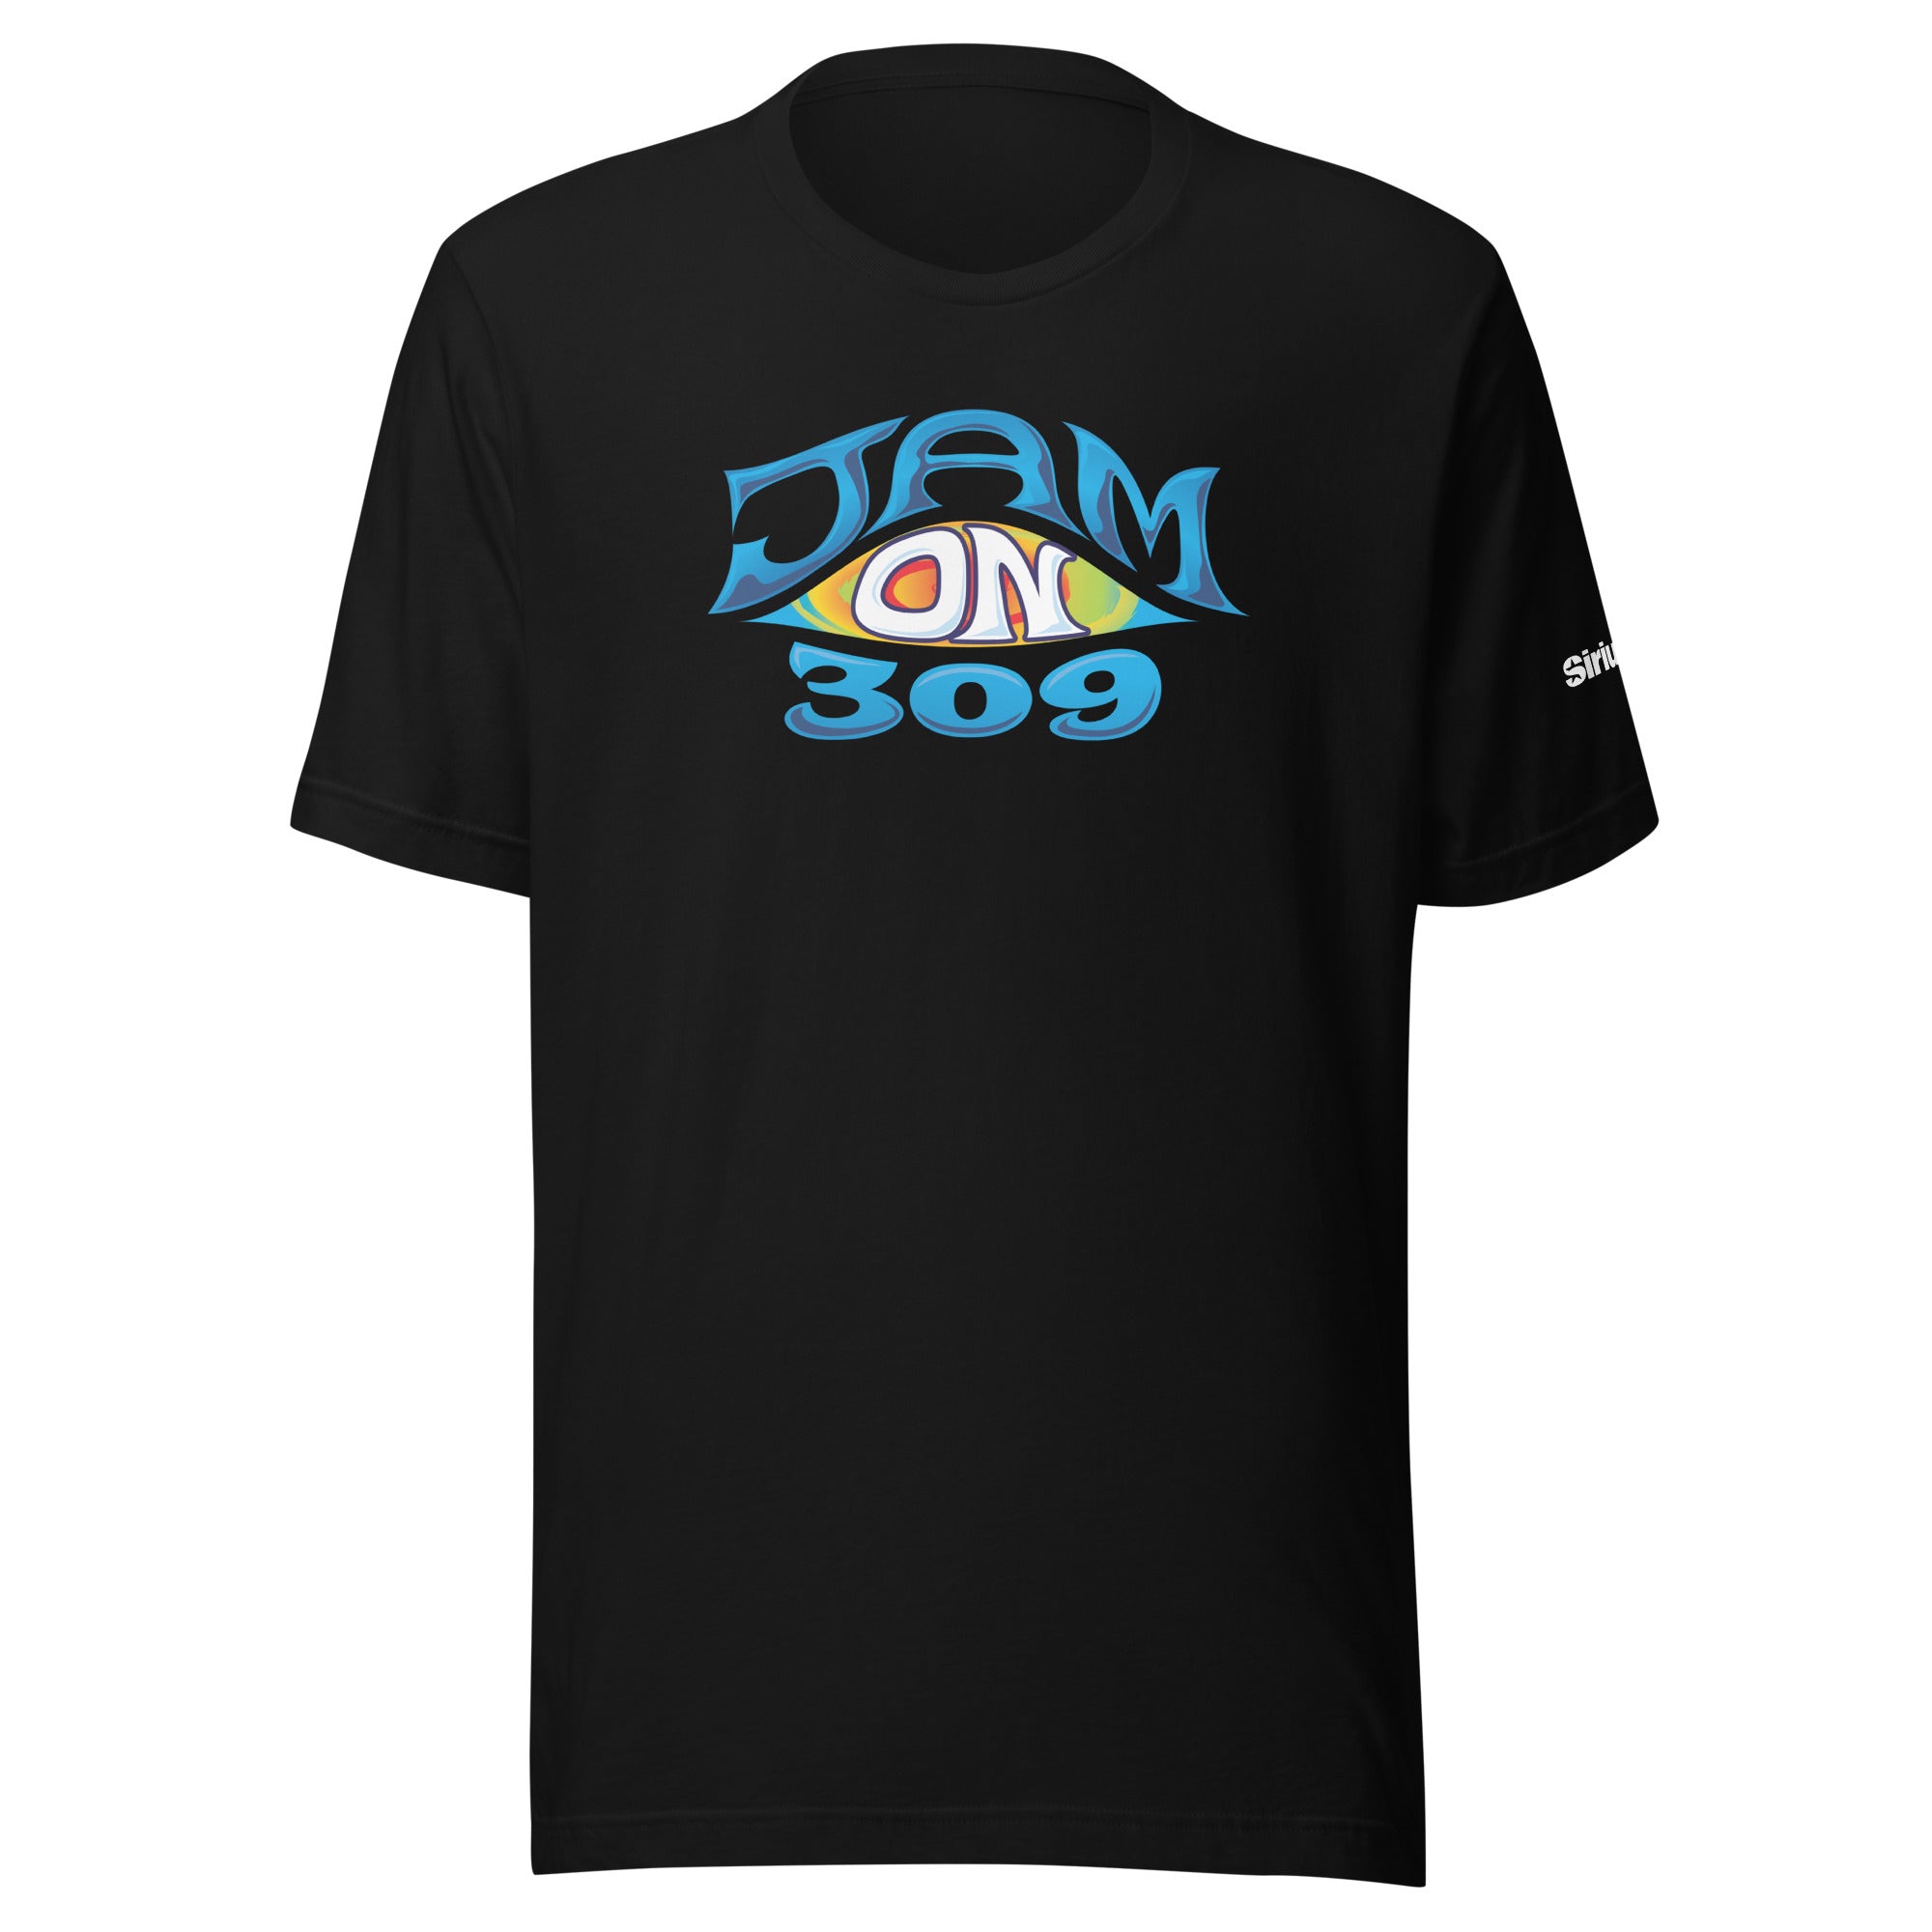 Jam on 309: T-shirt (Black)